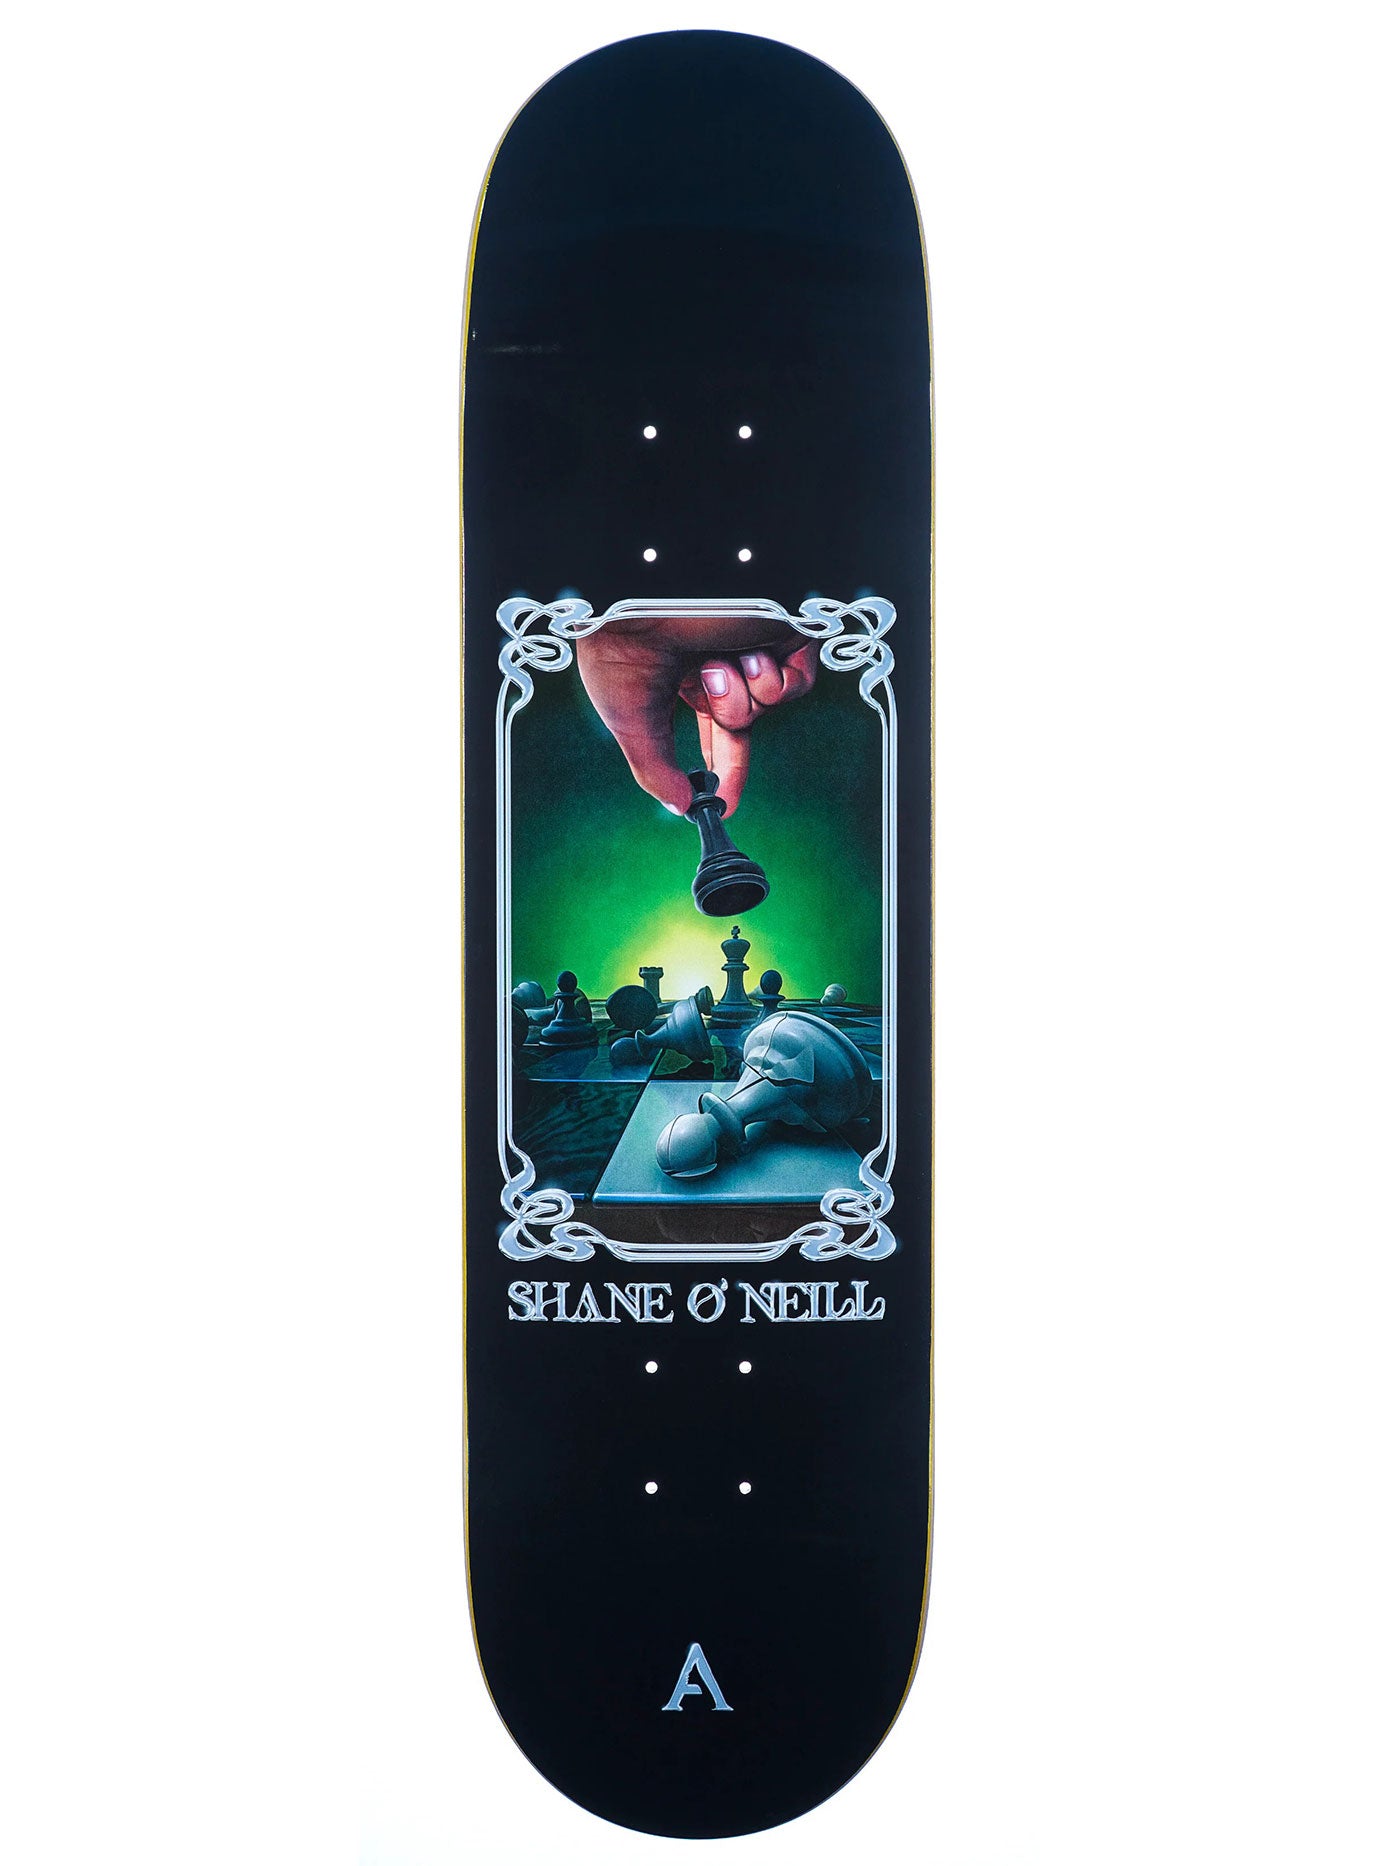 April Shane O'neill Check Mate 8.125 Skateboard Deck